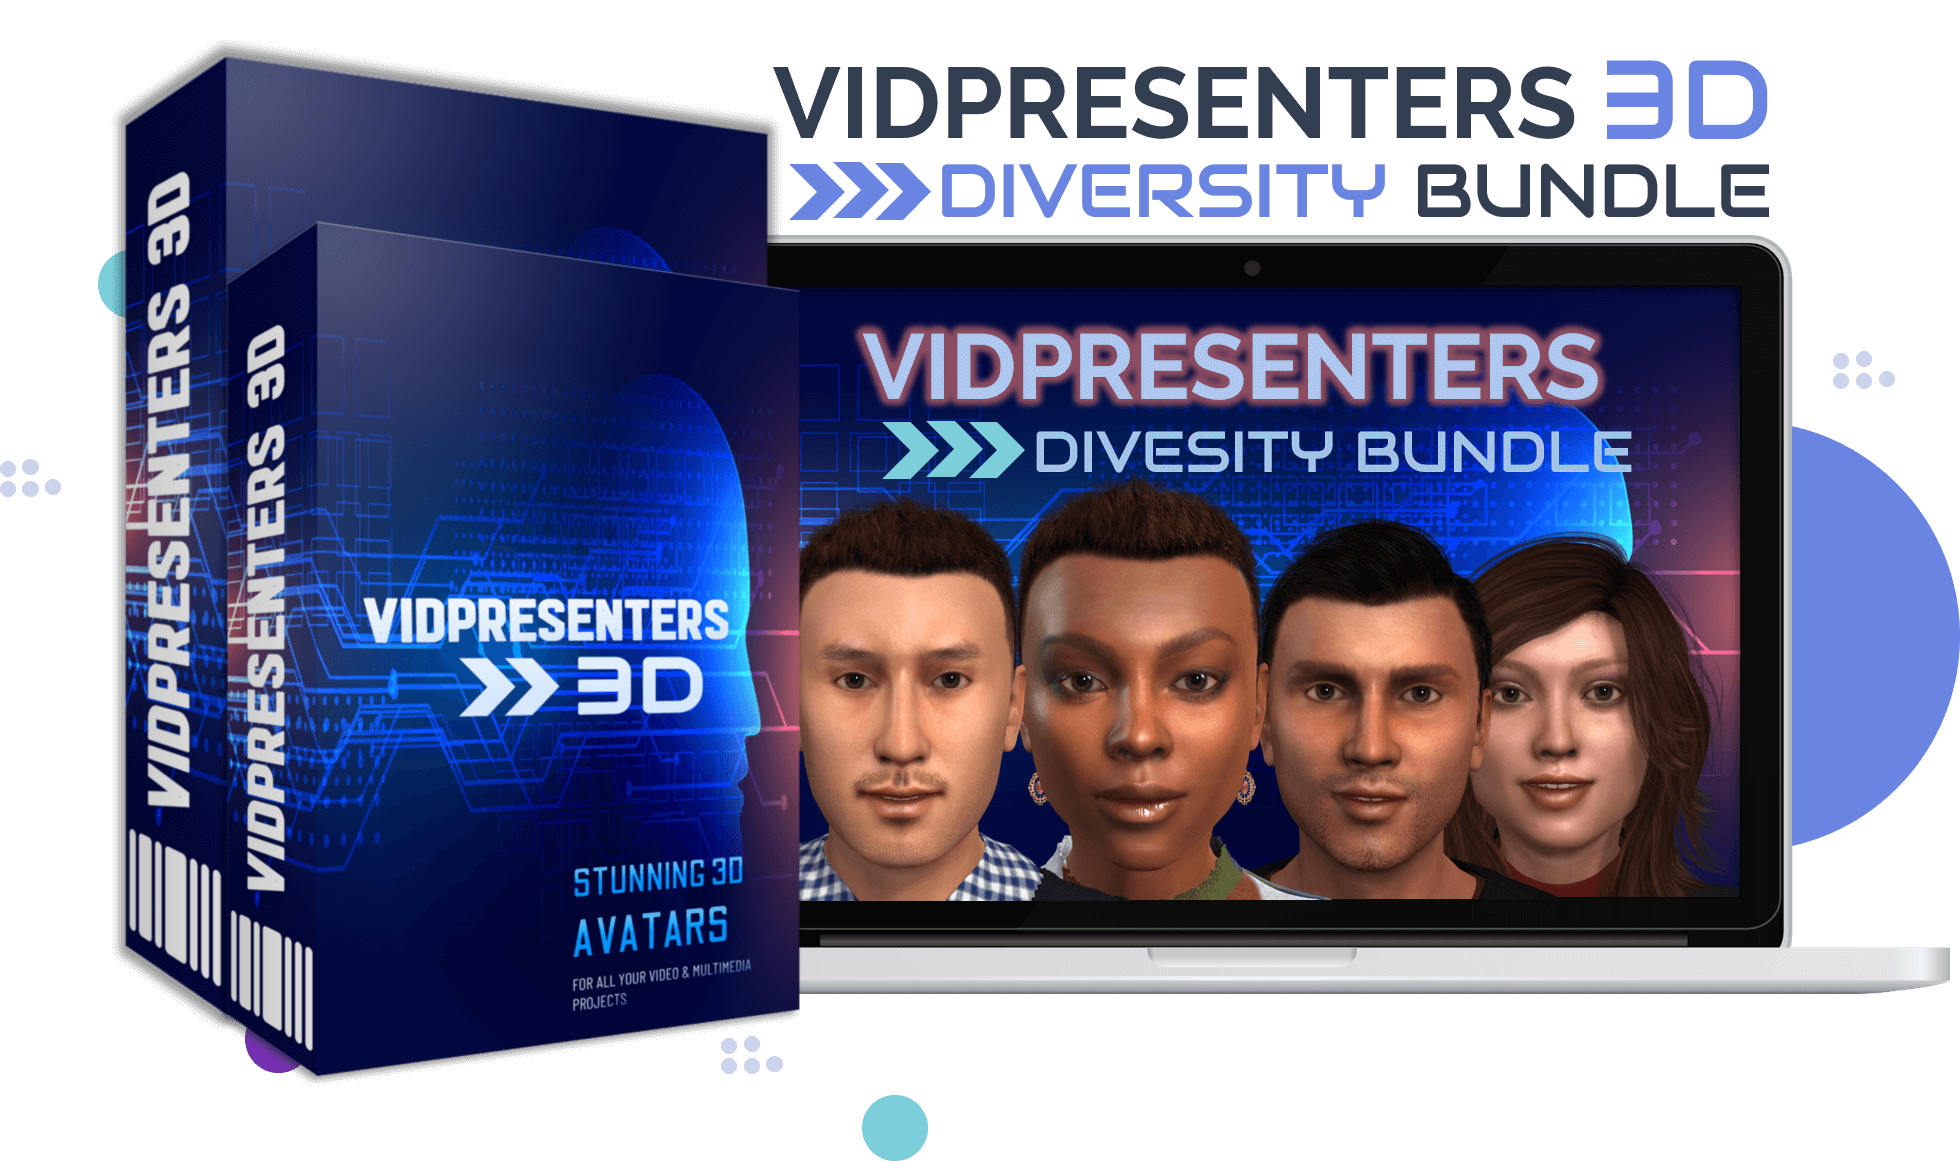 Vidpresenter-diversity-box